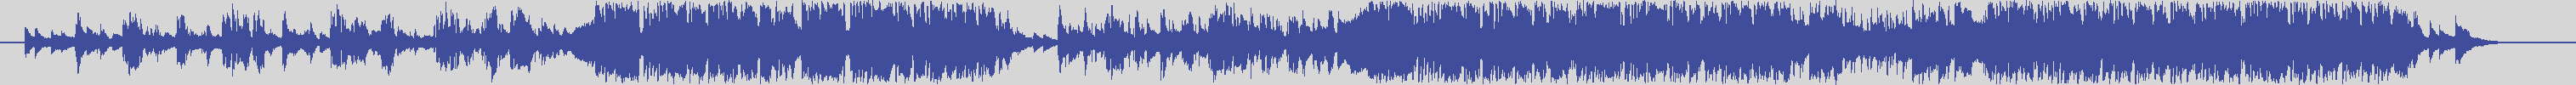 coverland_records [smile1095] Green Pine River - Hello Reggae [Original Mix] audio wave form